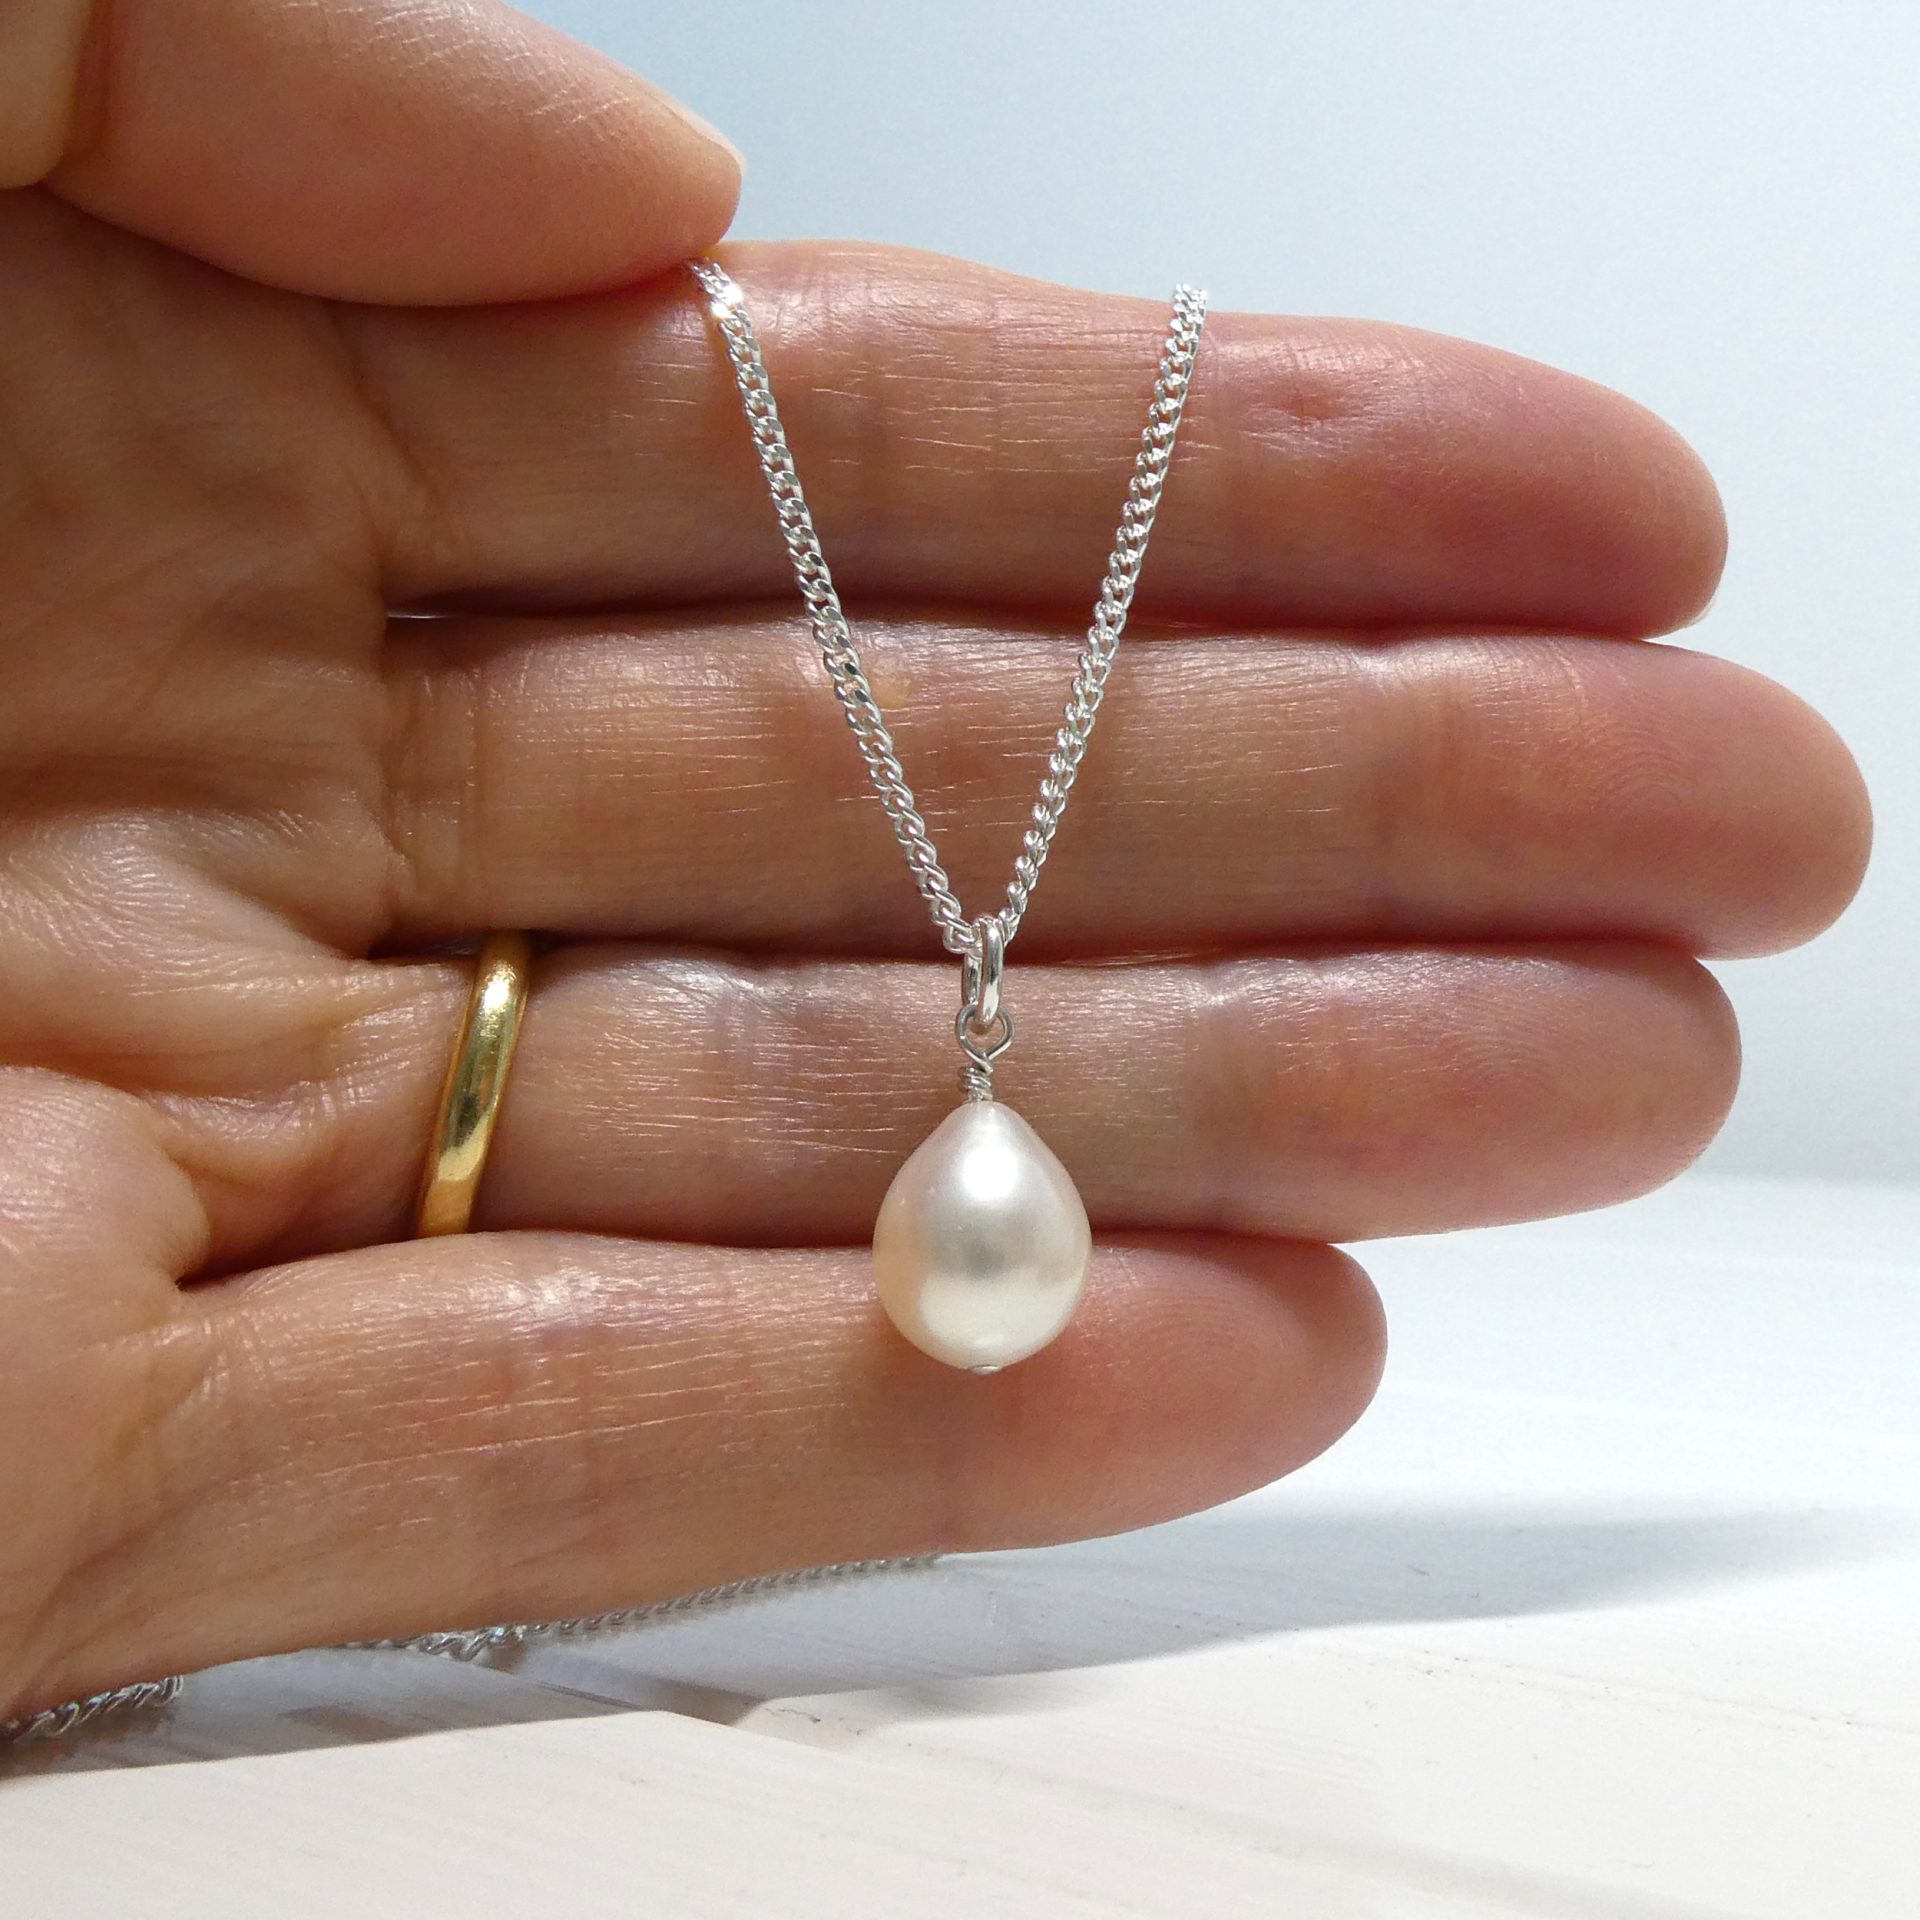 Welry 10.5-11mm Freshwater Pearl Teardrop Pendant Necklace in Sterling  Silver, 18